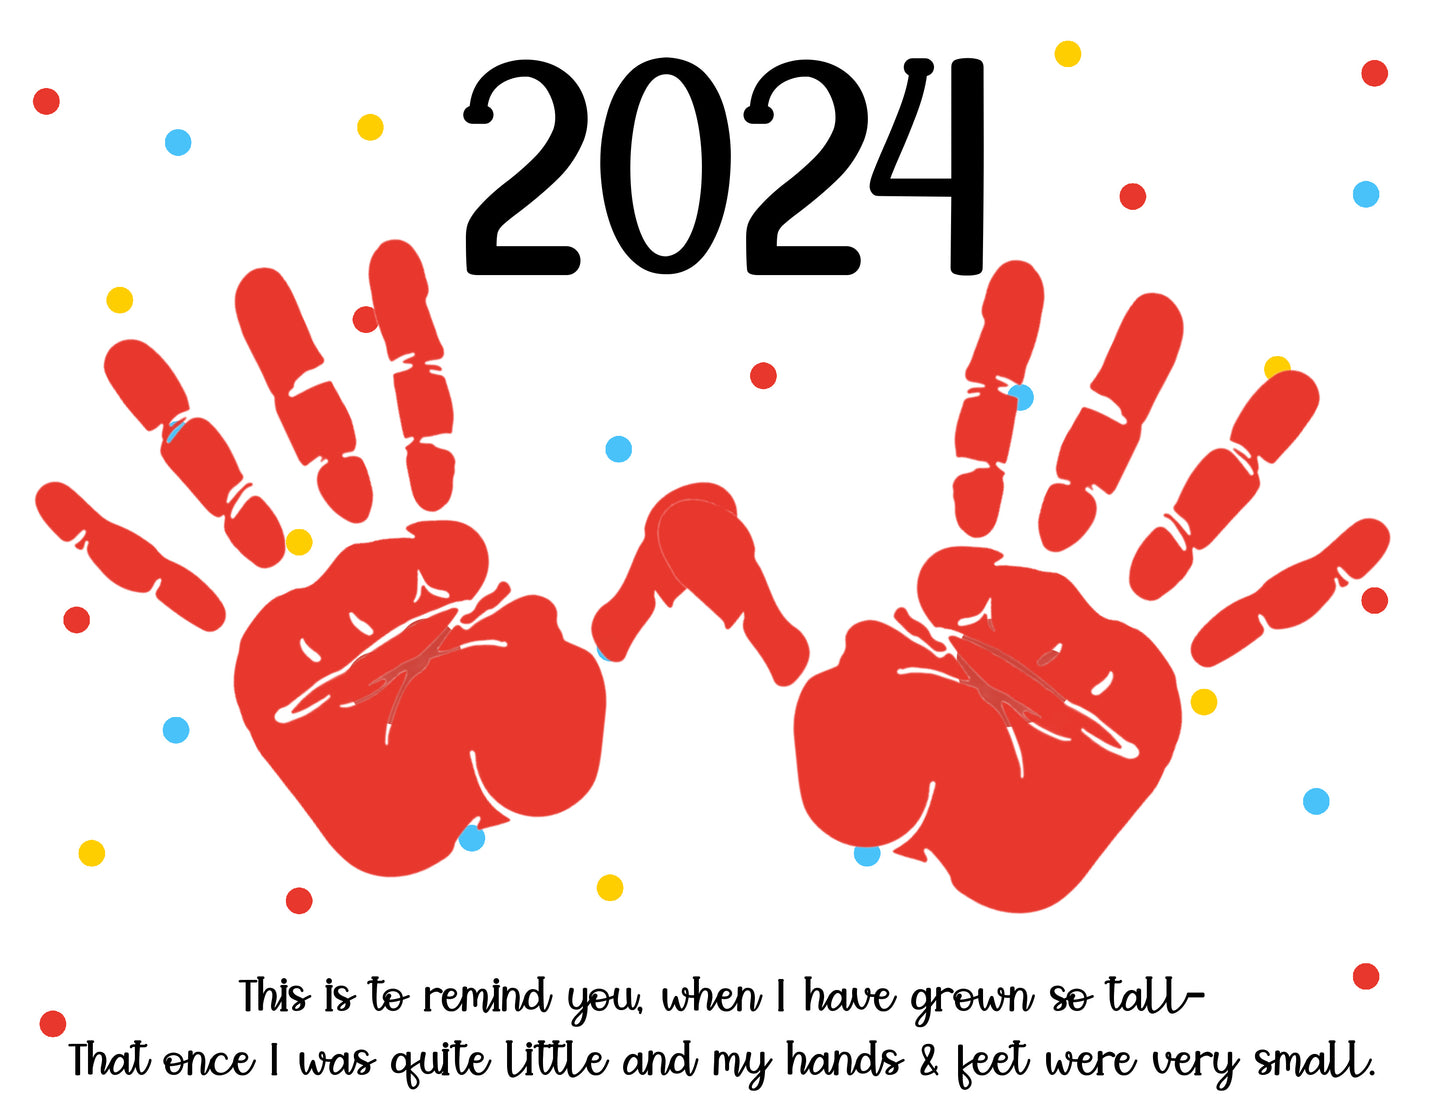 2024 Handprint Calendar- PDF (printable download)